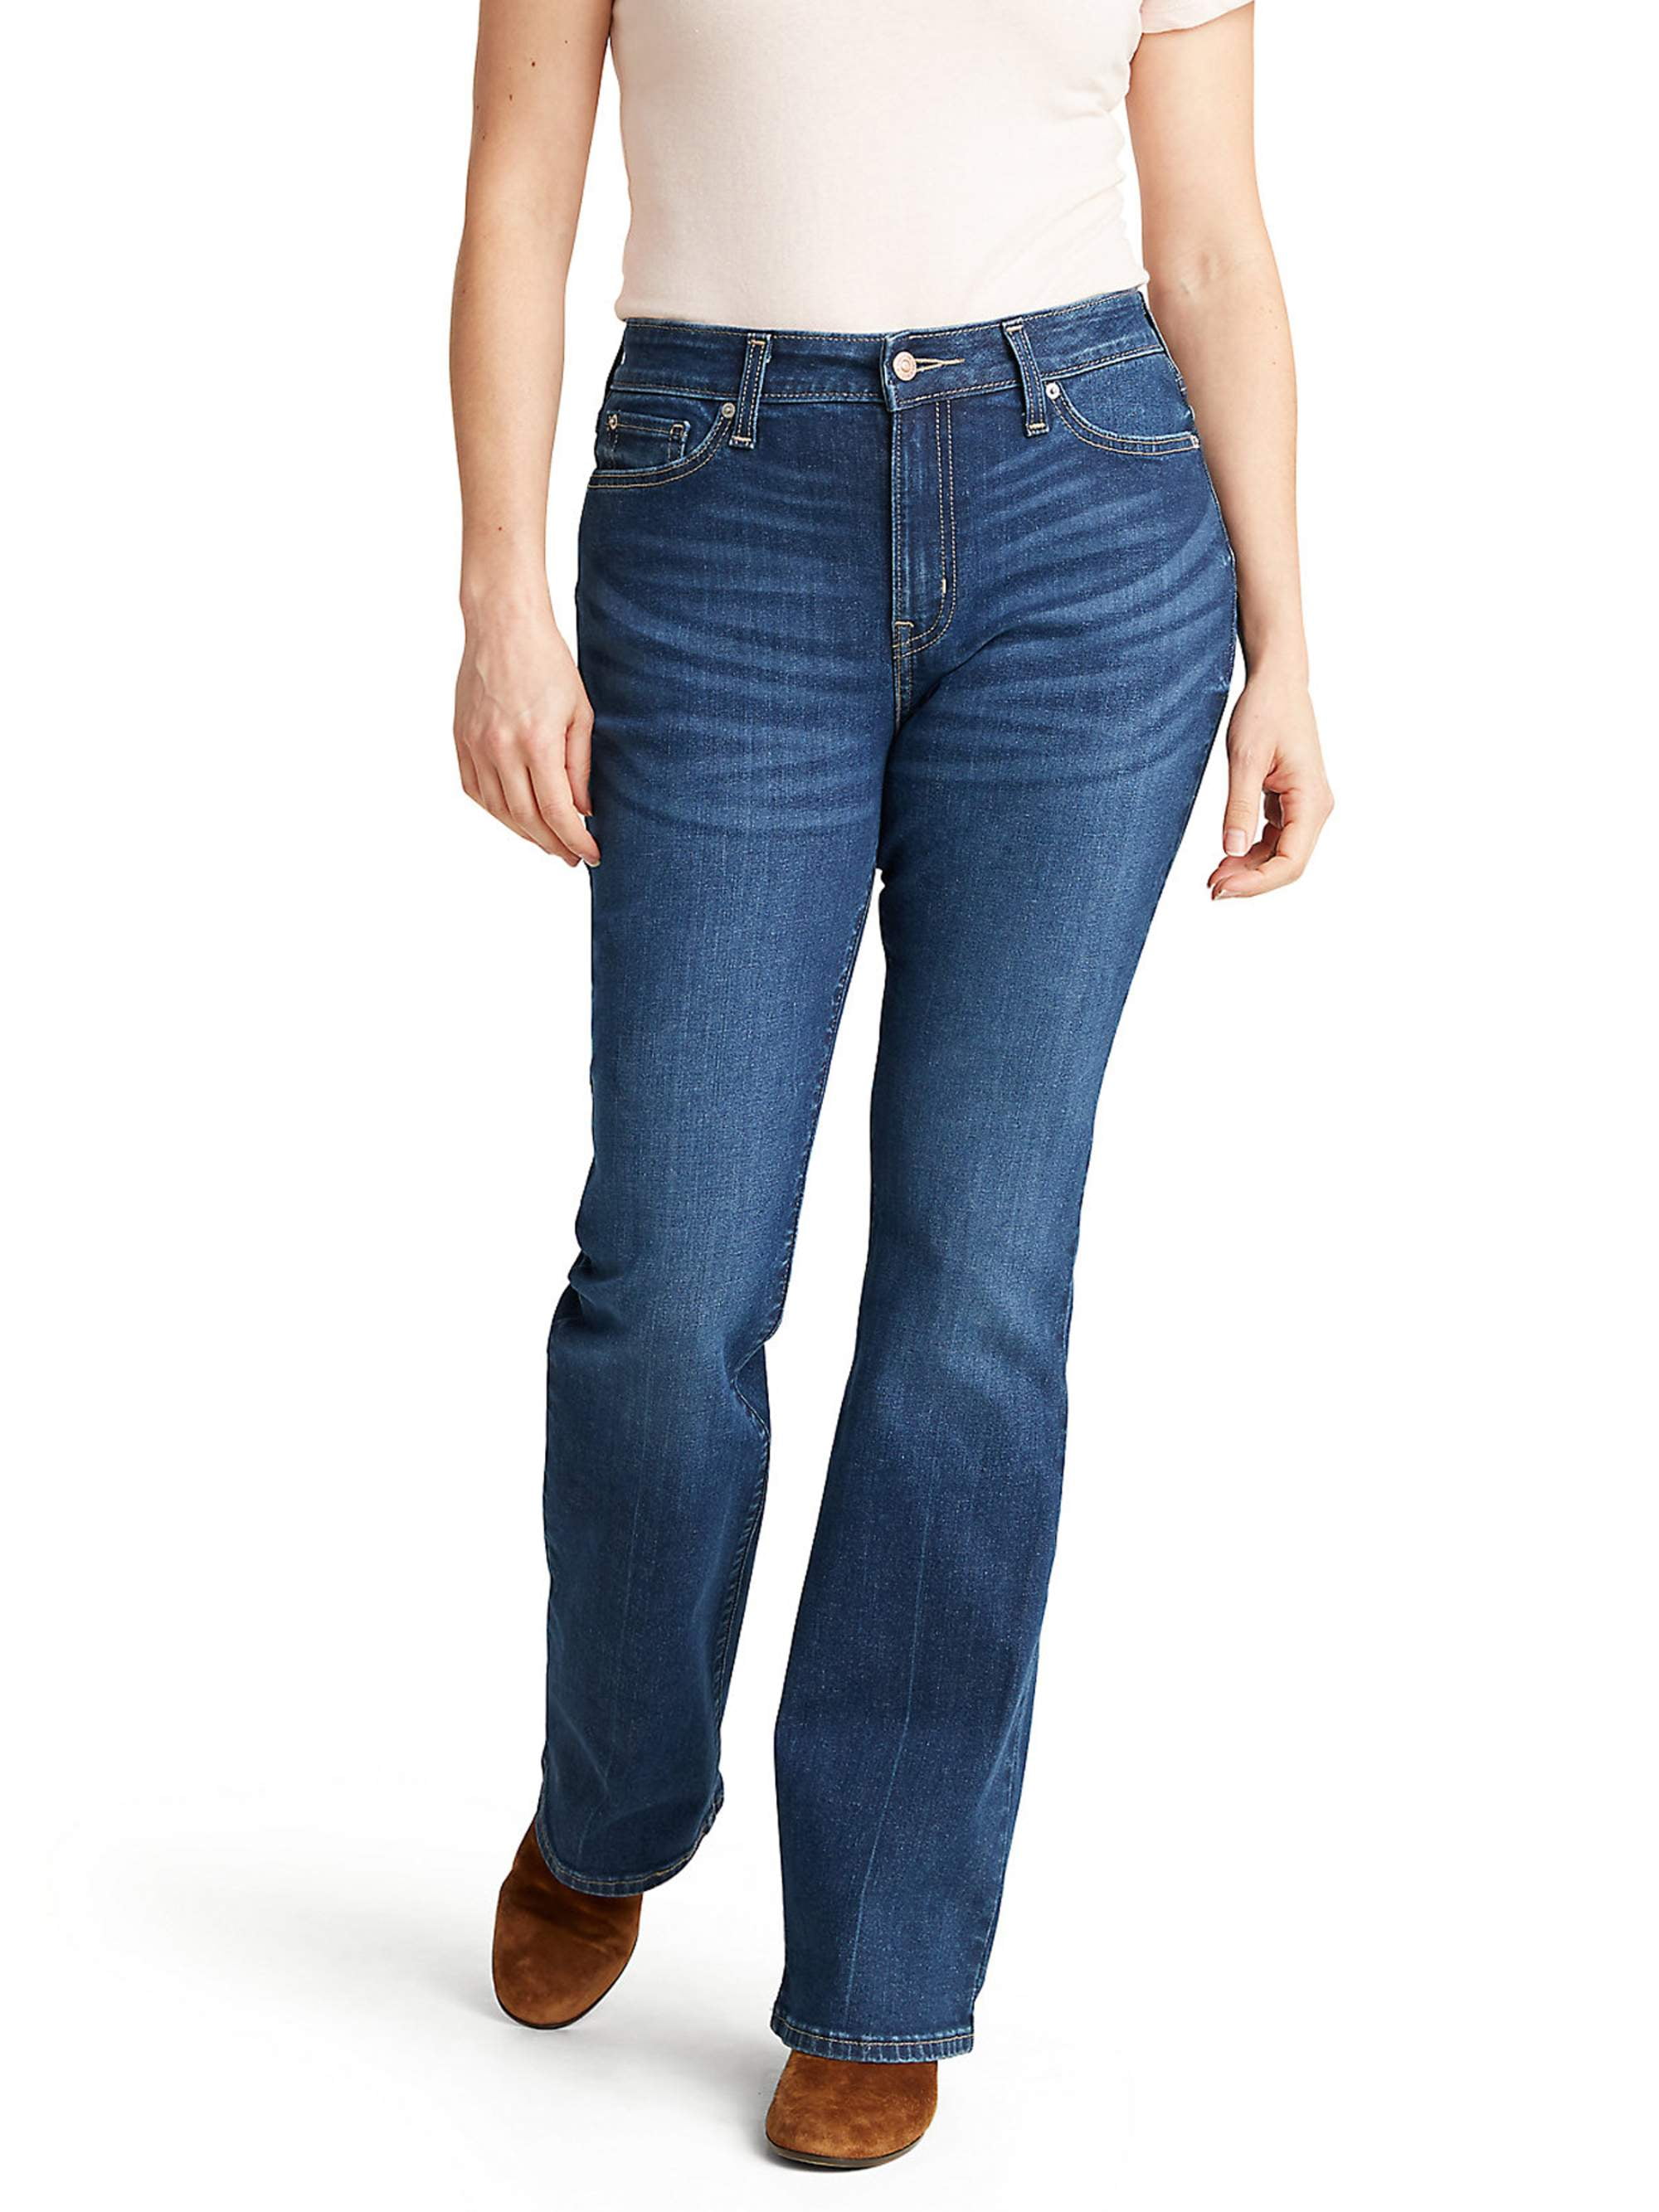 Buy > levi bootcut jeans women's high waist > in stock